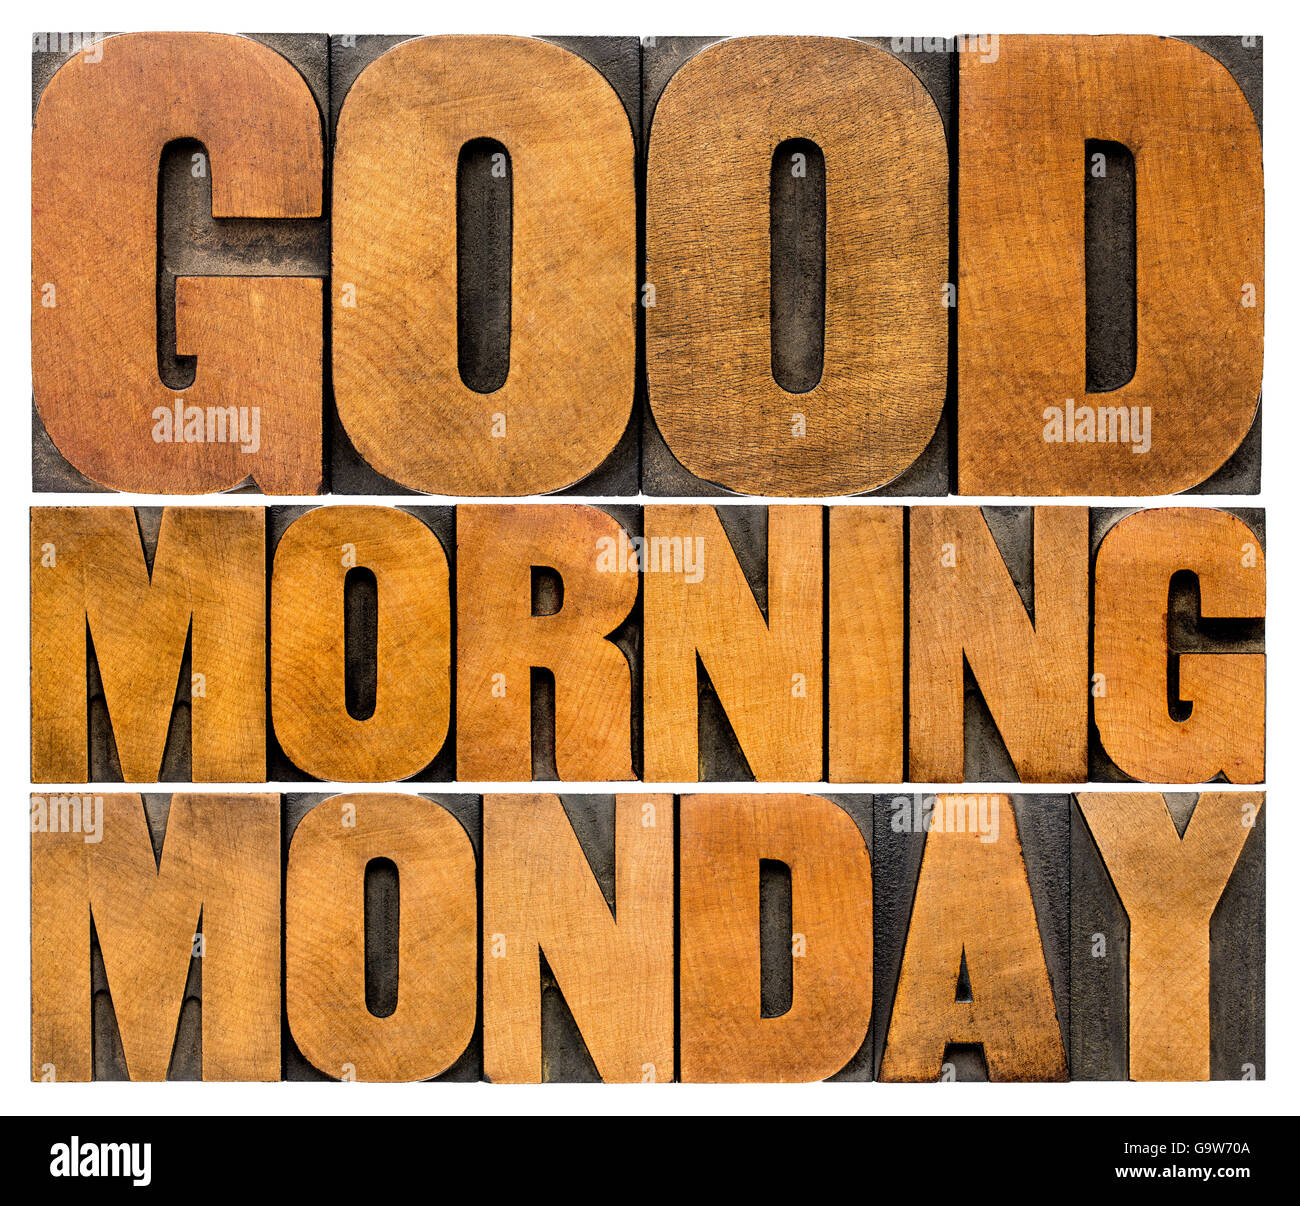 Buena mañana lunes palabra abstracta: texto aislado en vintage tipografía tipo de madera bloques de impresión Foto de stock